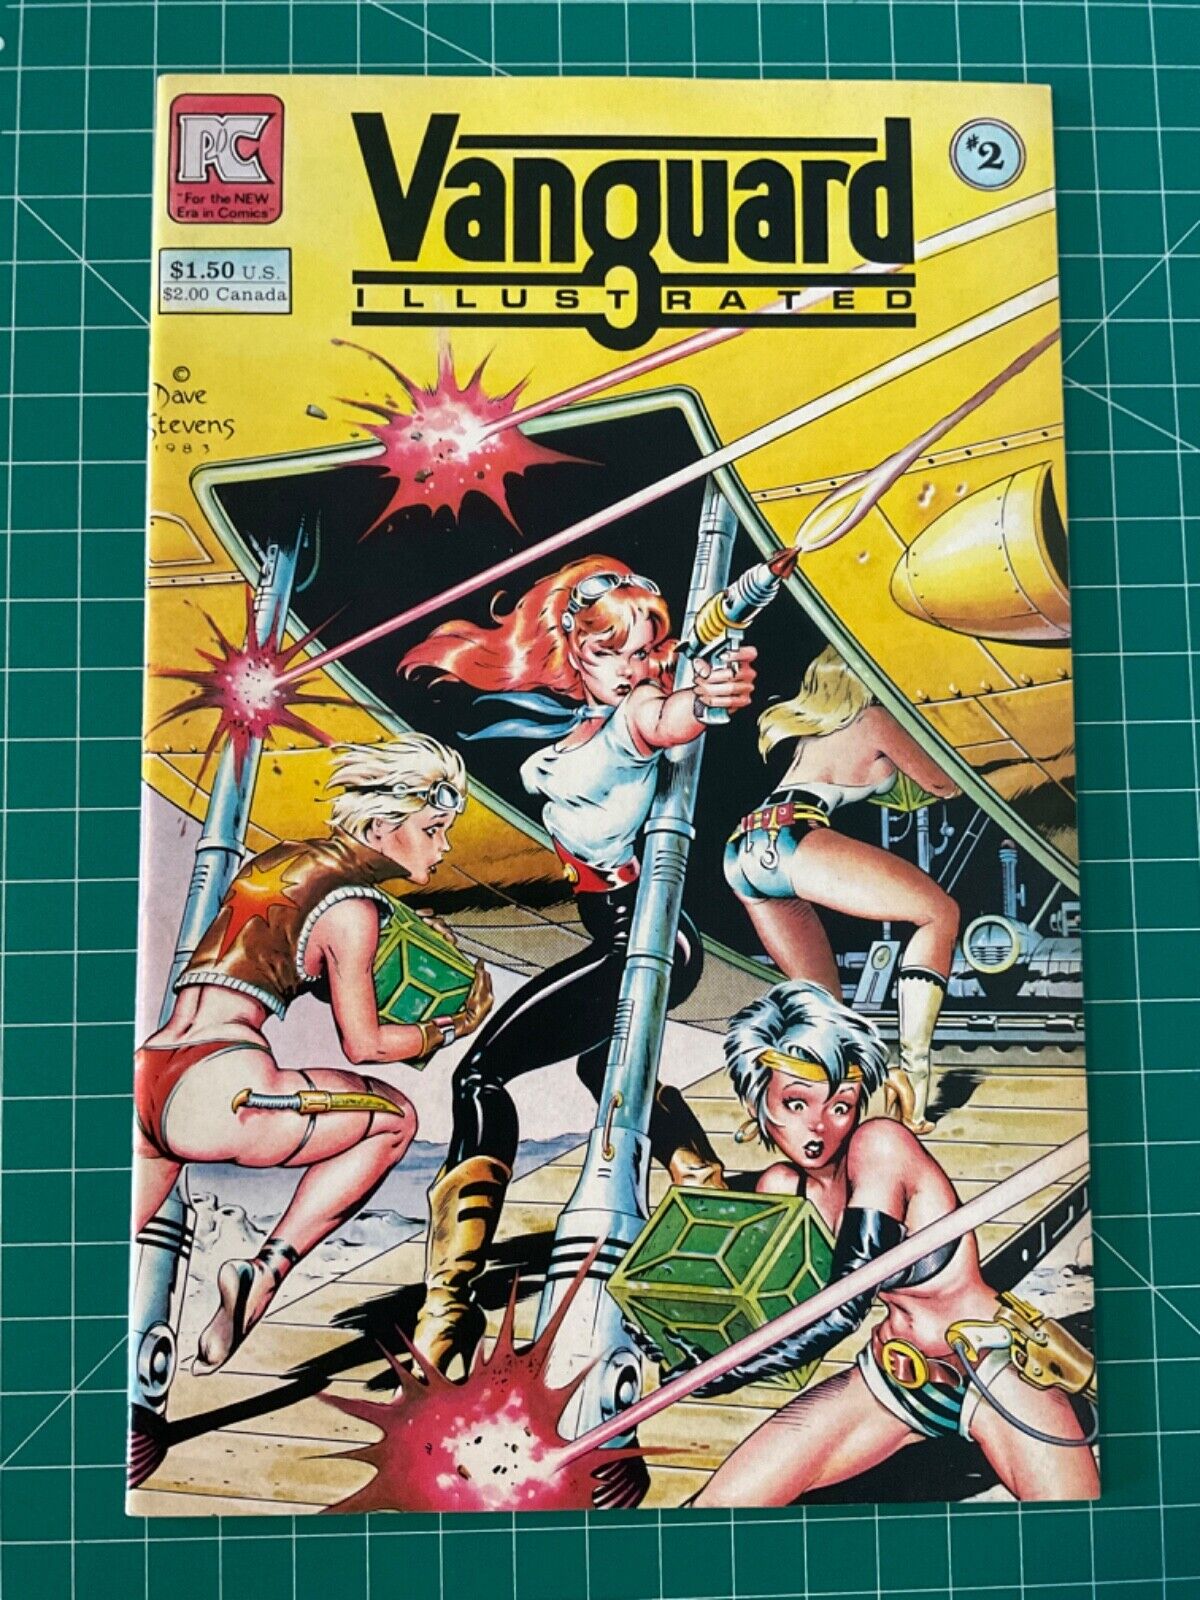 VANGUARD Illustrated #2 Jan 1984 Dave Stevens cover -  Pacific Comics